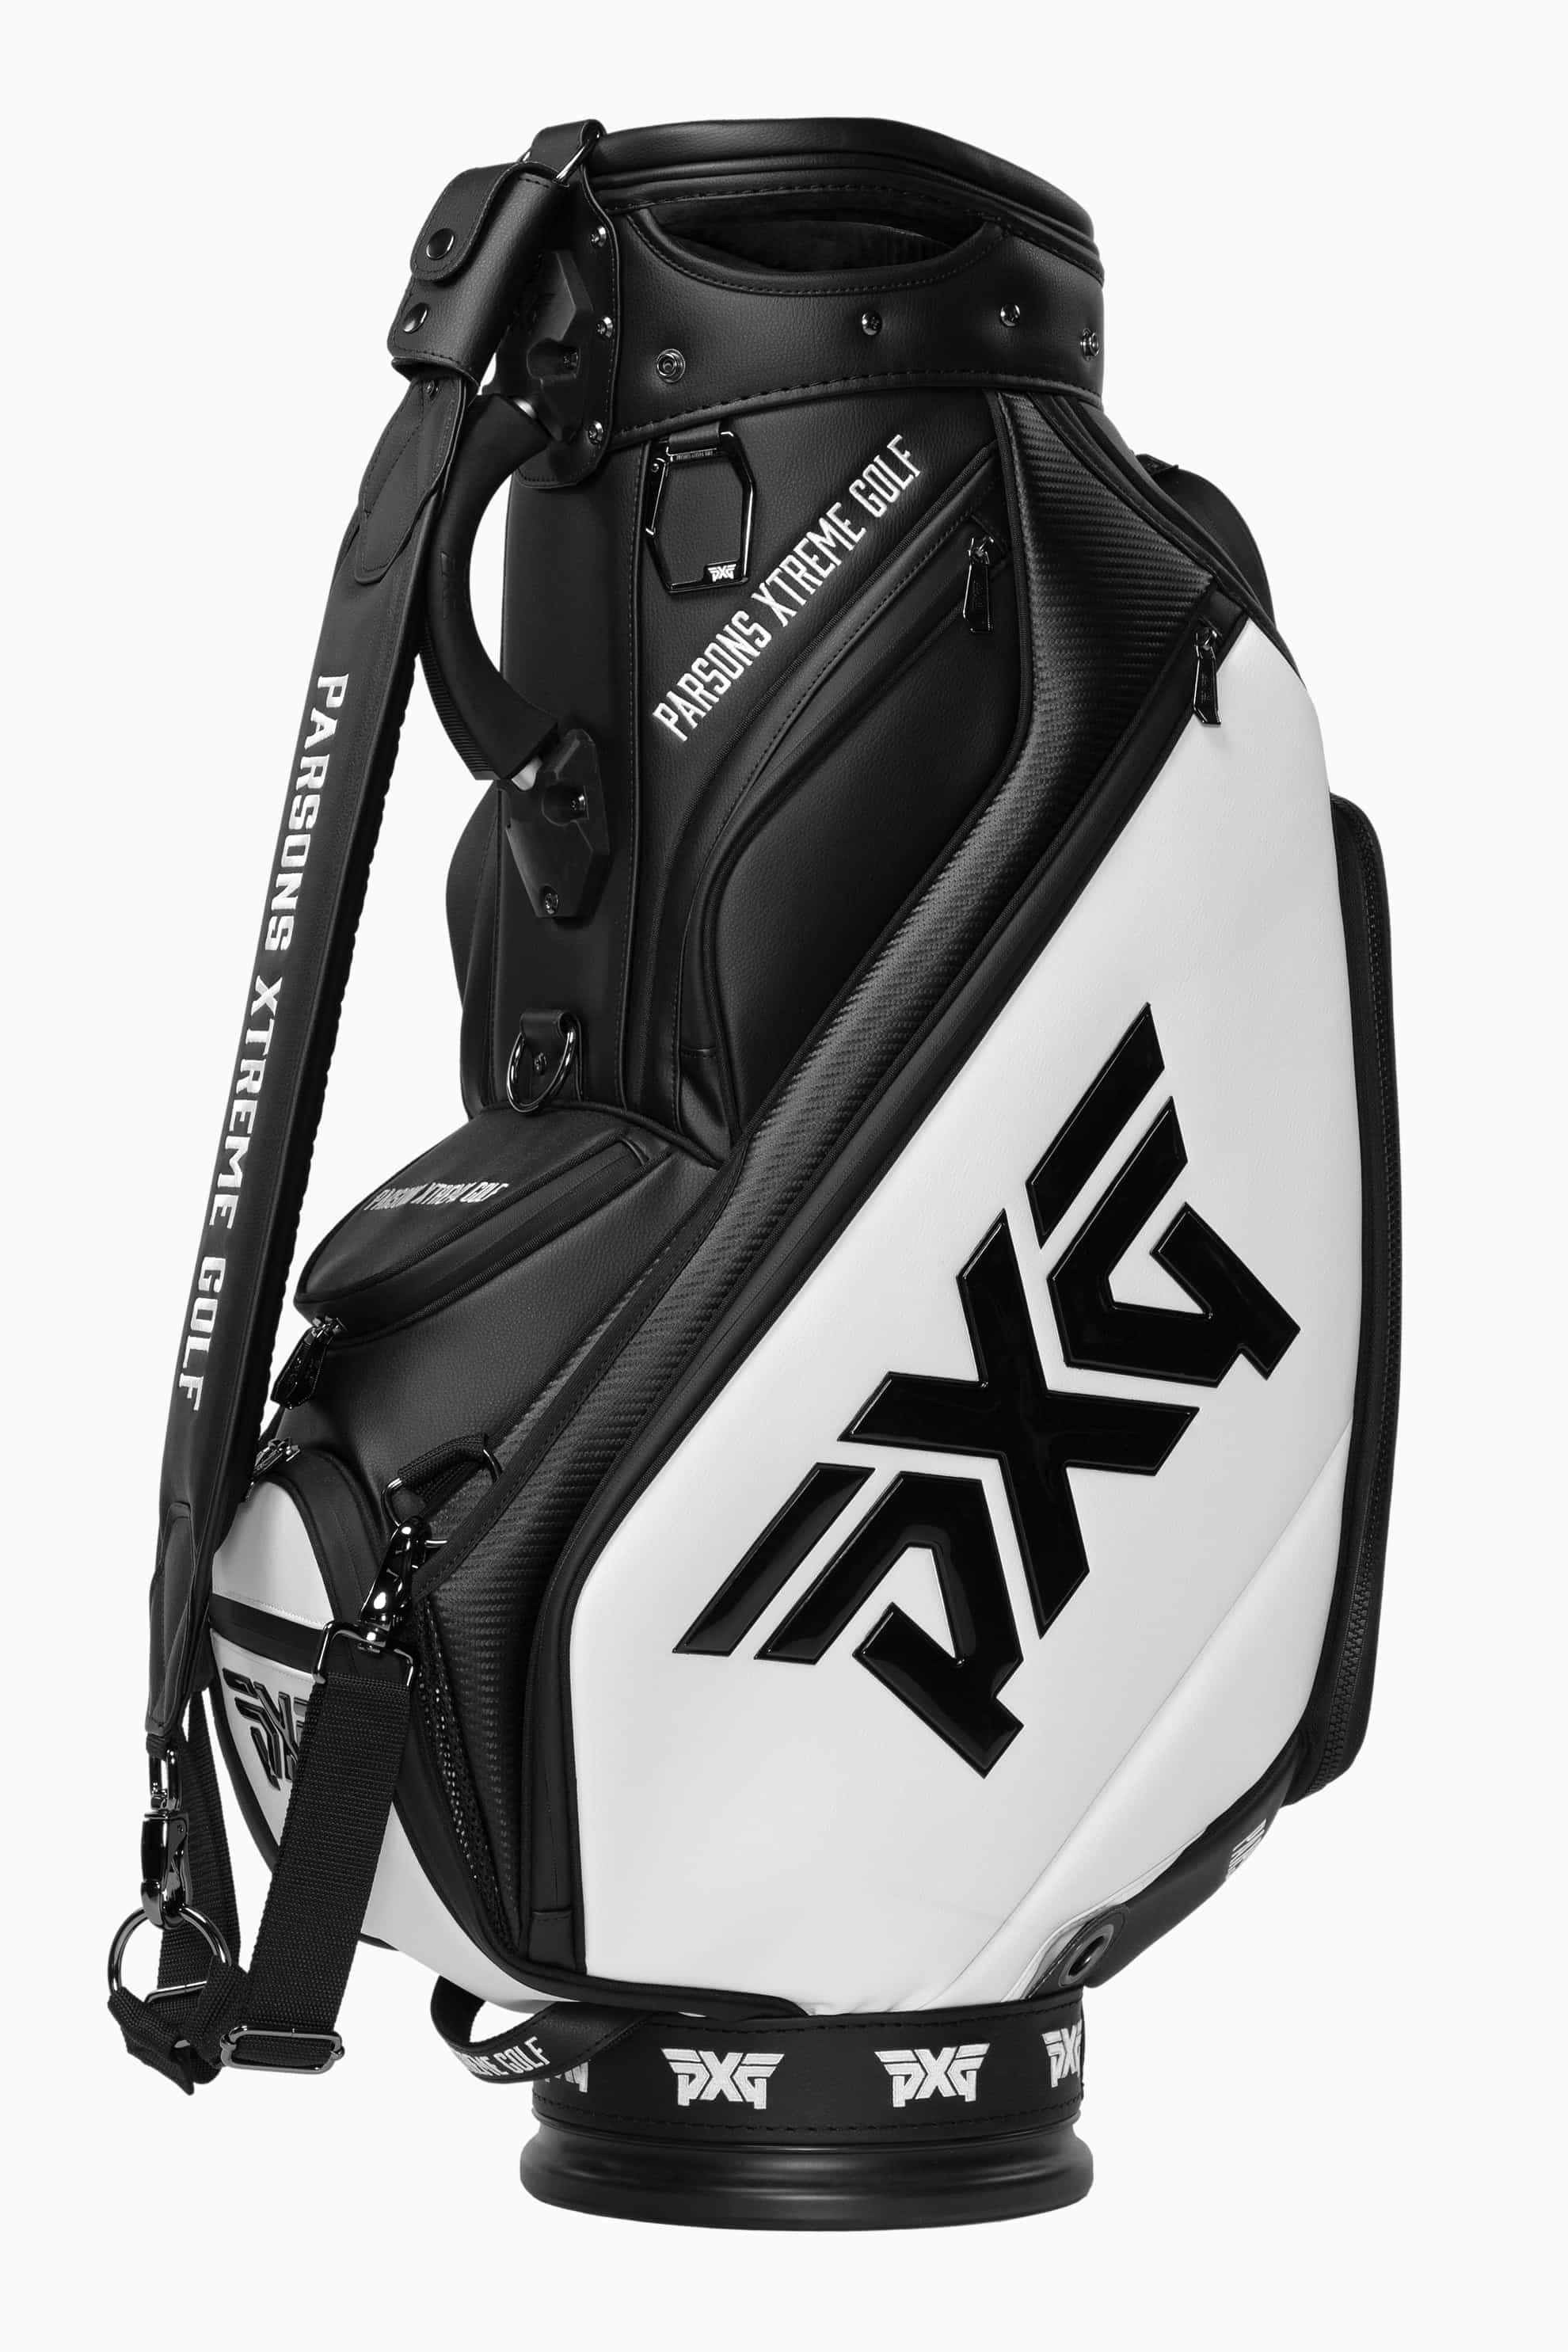 PXG Tour Bag in Black & White